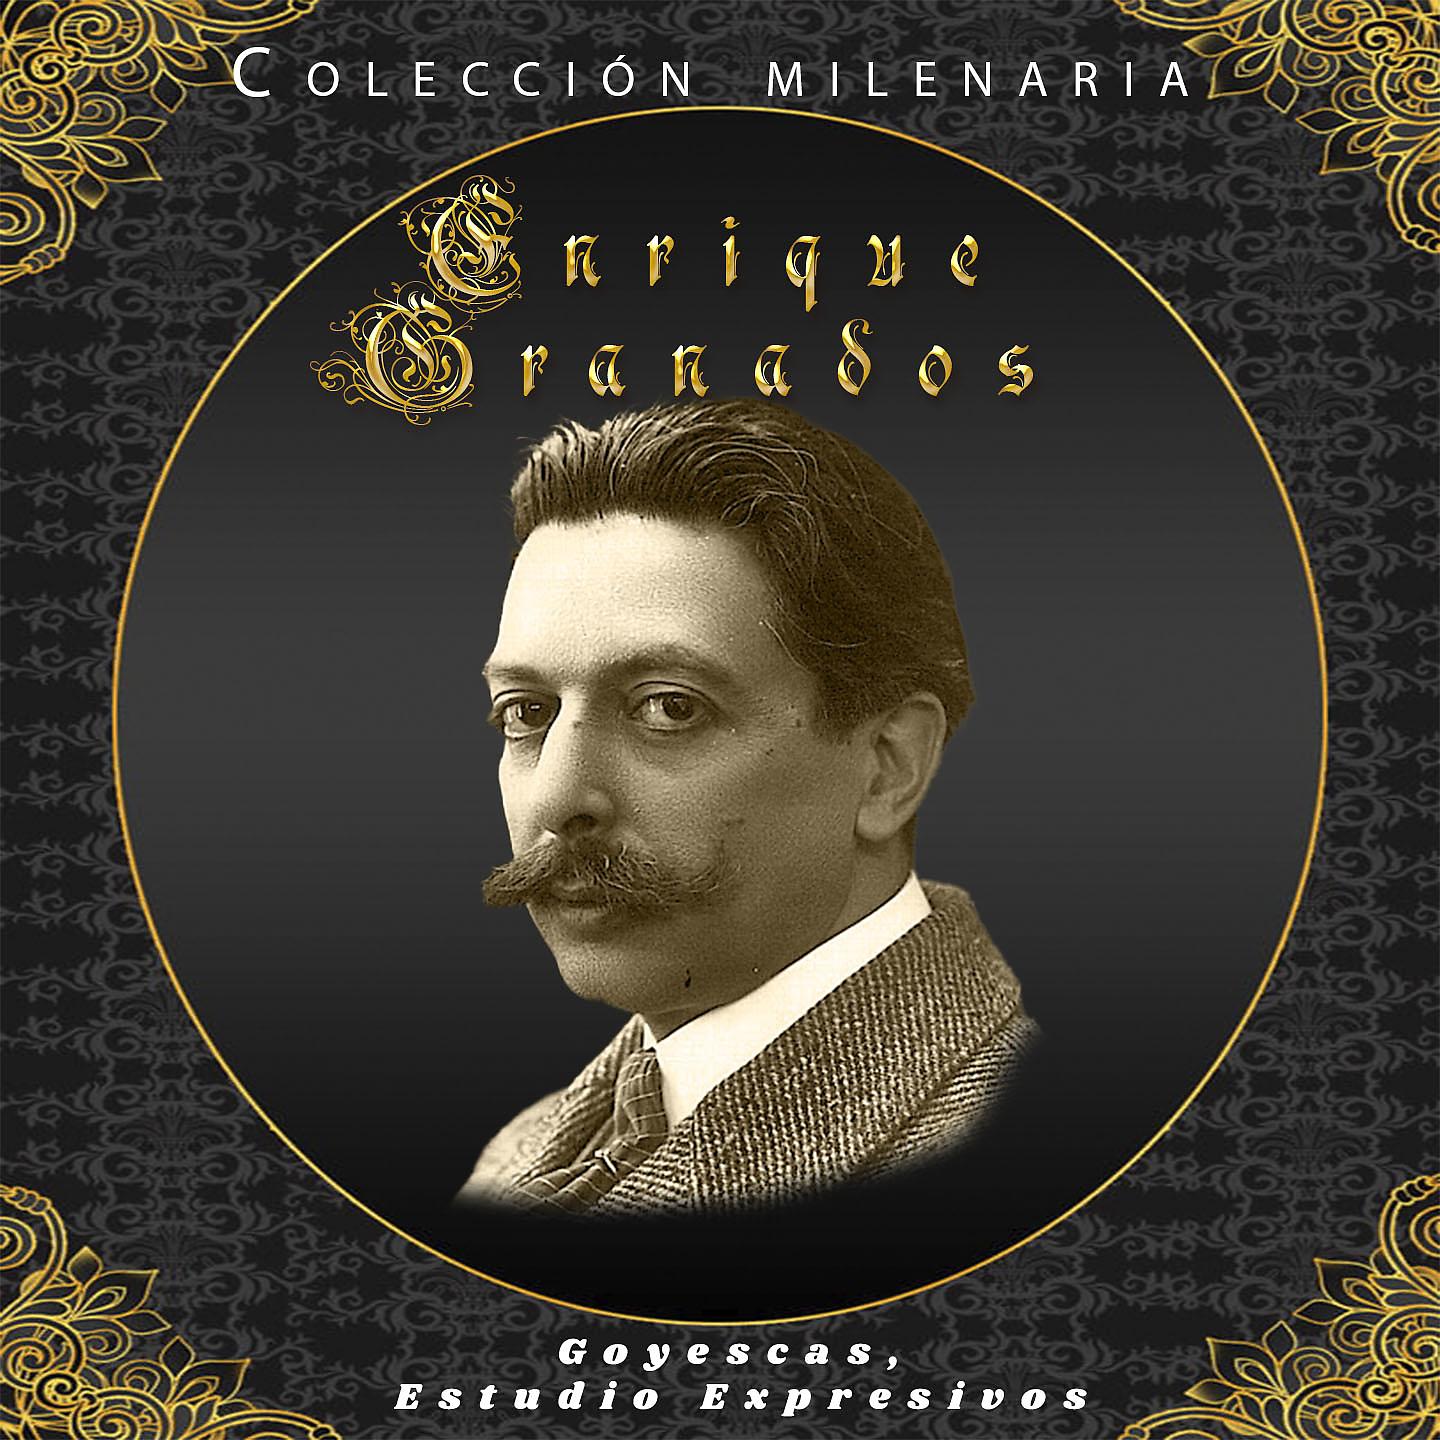 Постер альбома Colección Milenaria - Enrique Granados, Goyescas, Estudio Expresivos